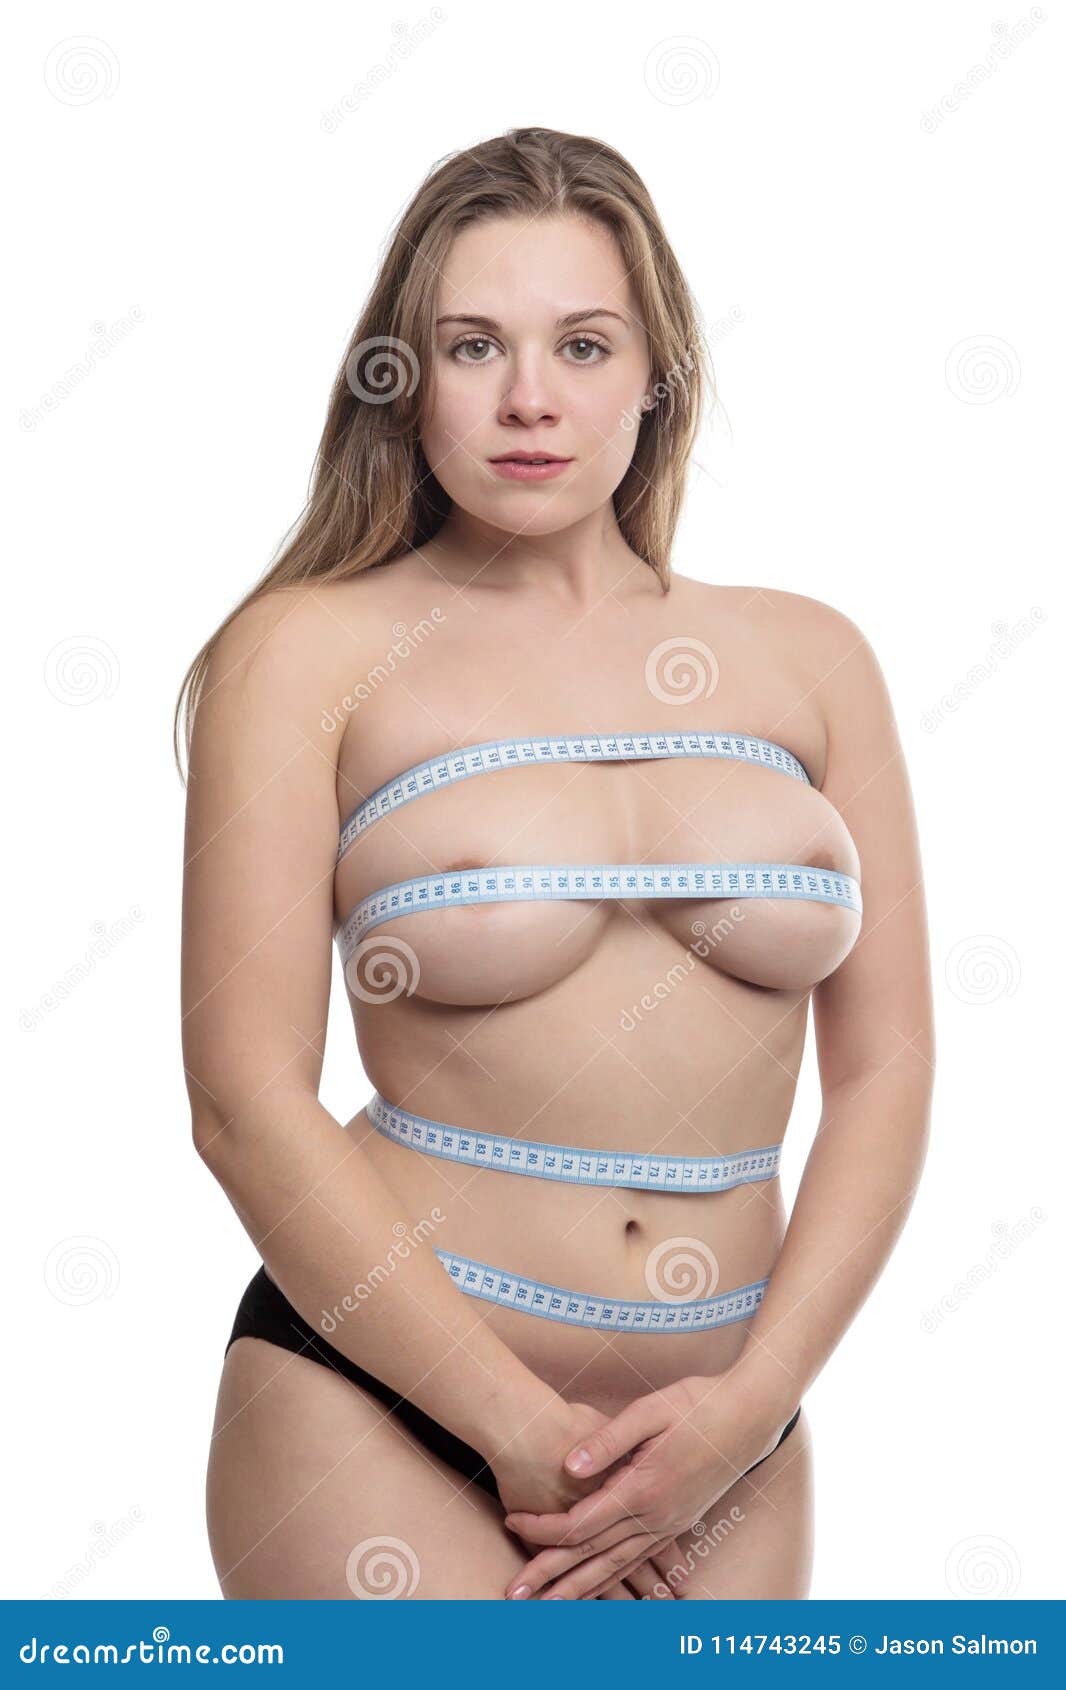 charles latimore add topless women photos photo